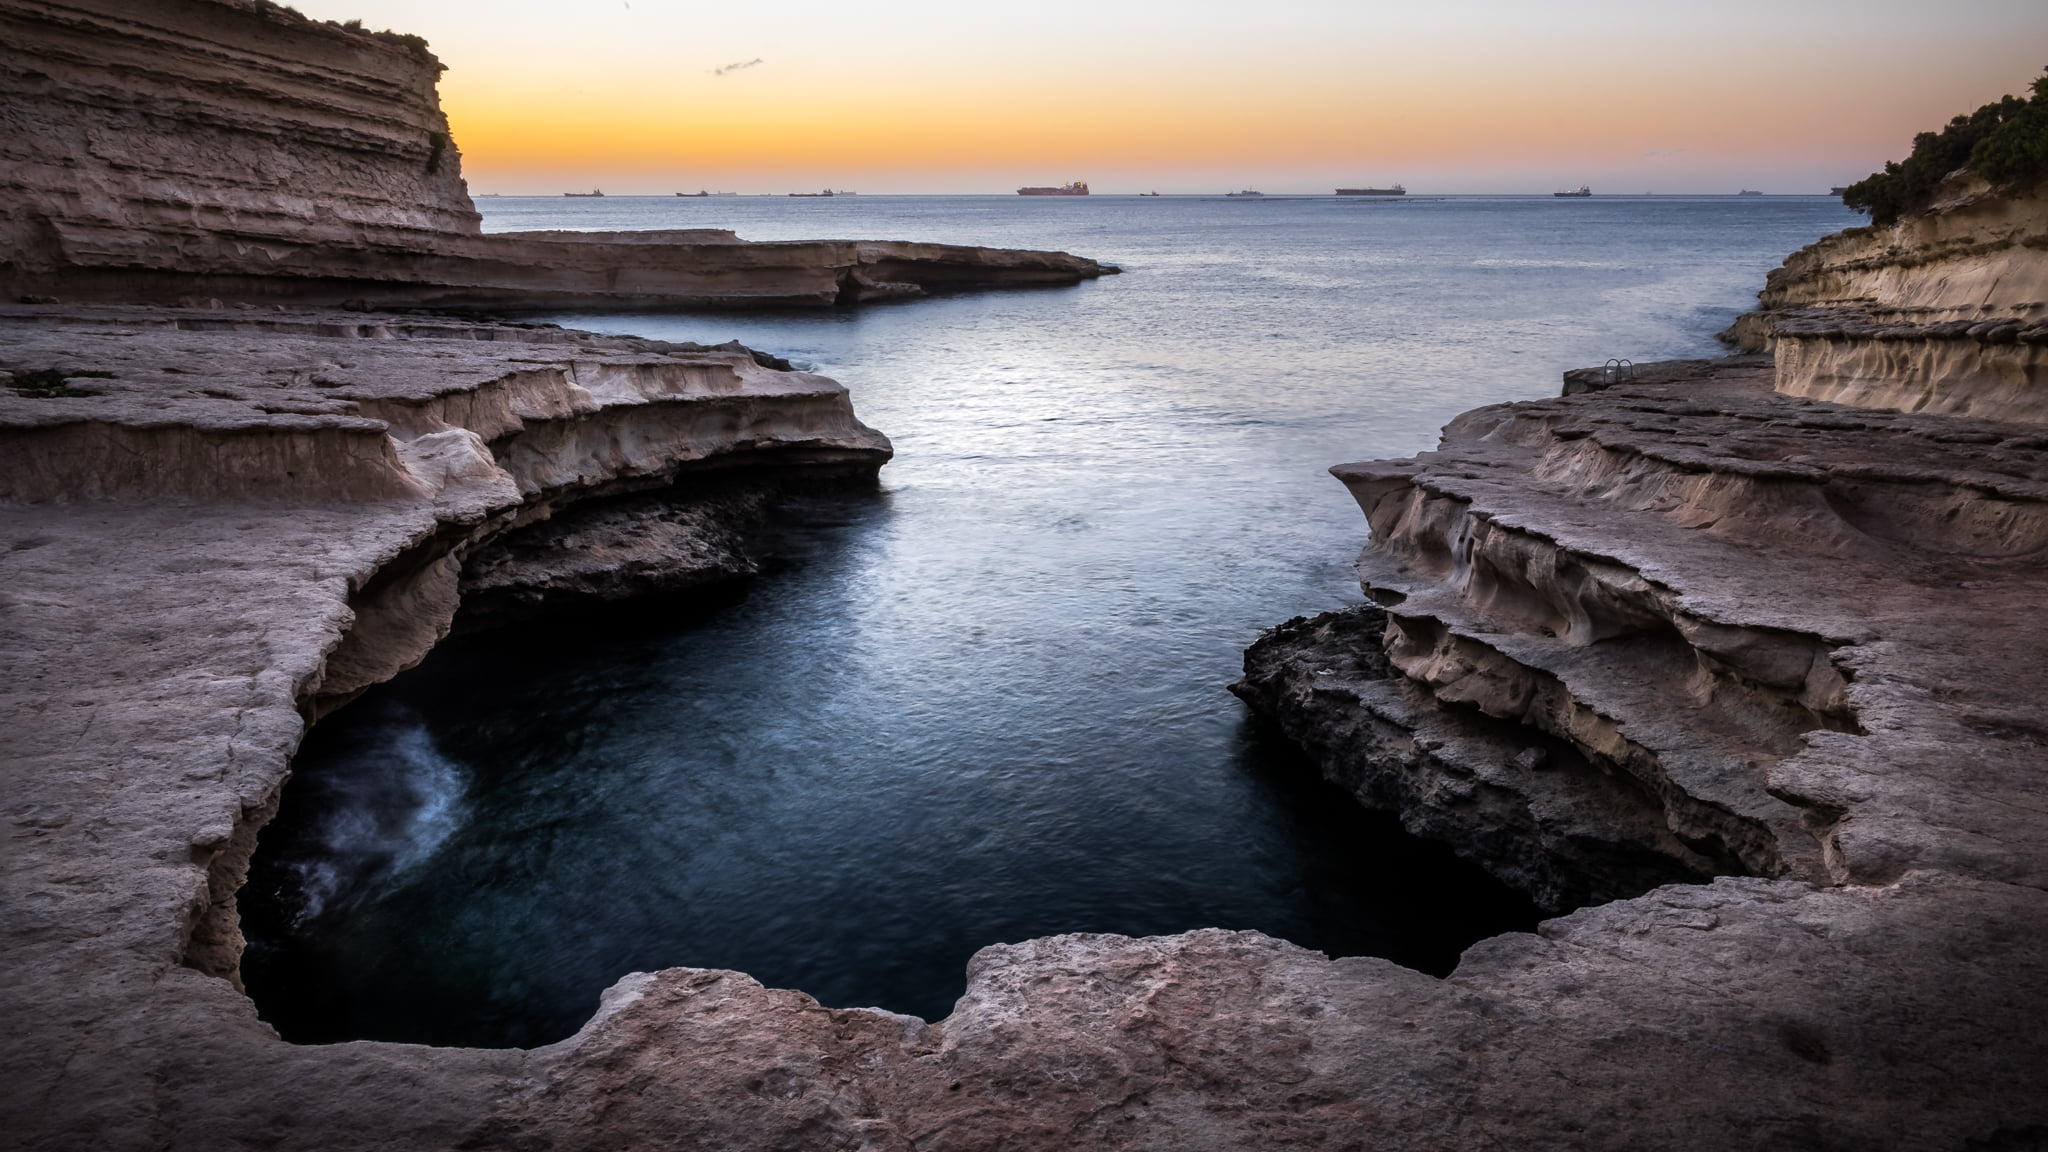 brown rock formation near body of water, malta, malta, St Peter's pool